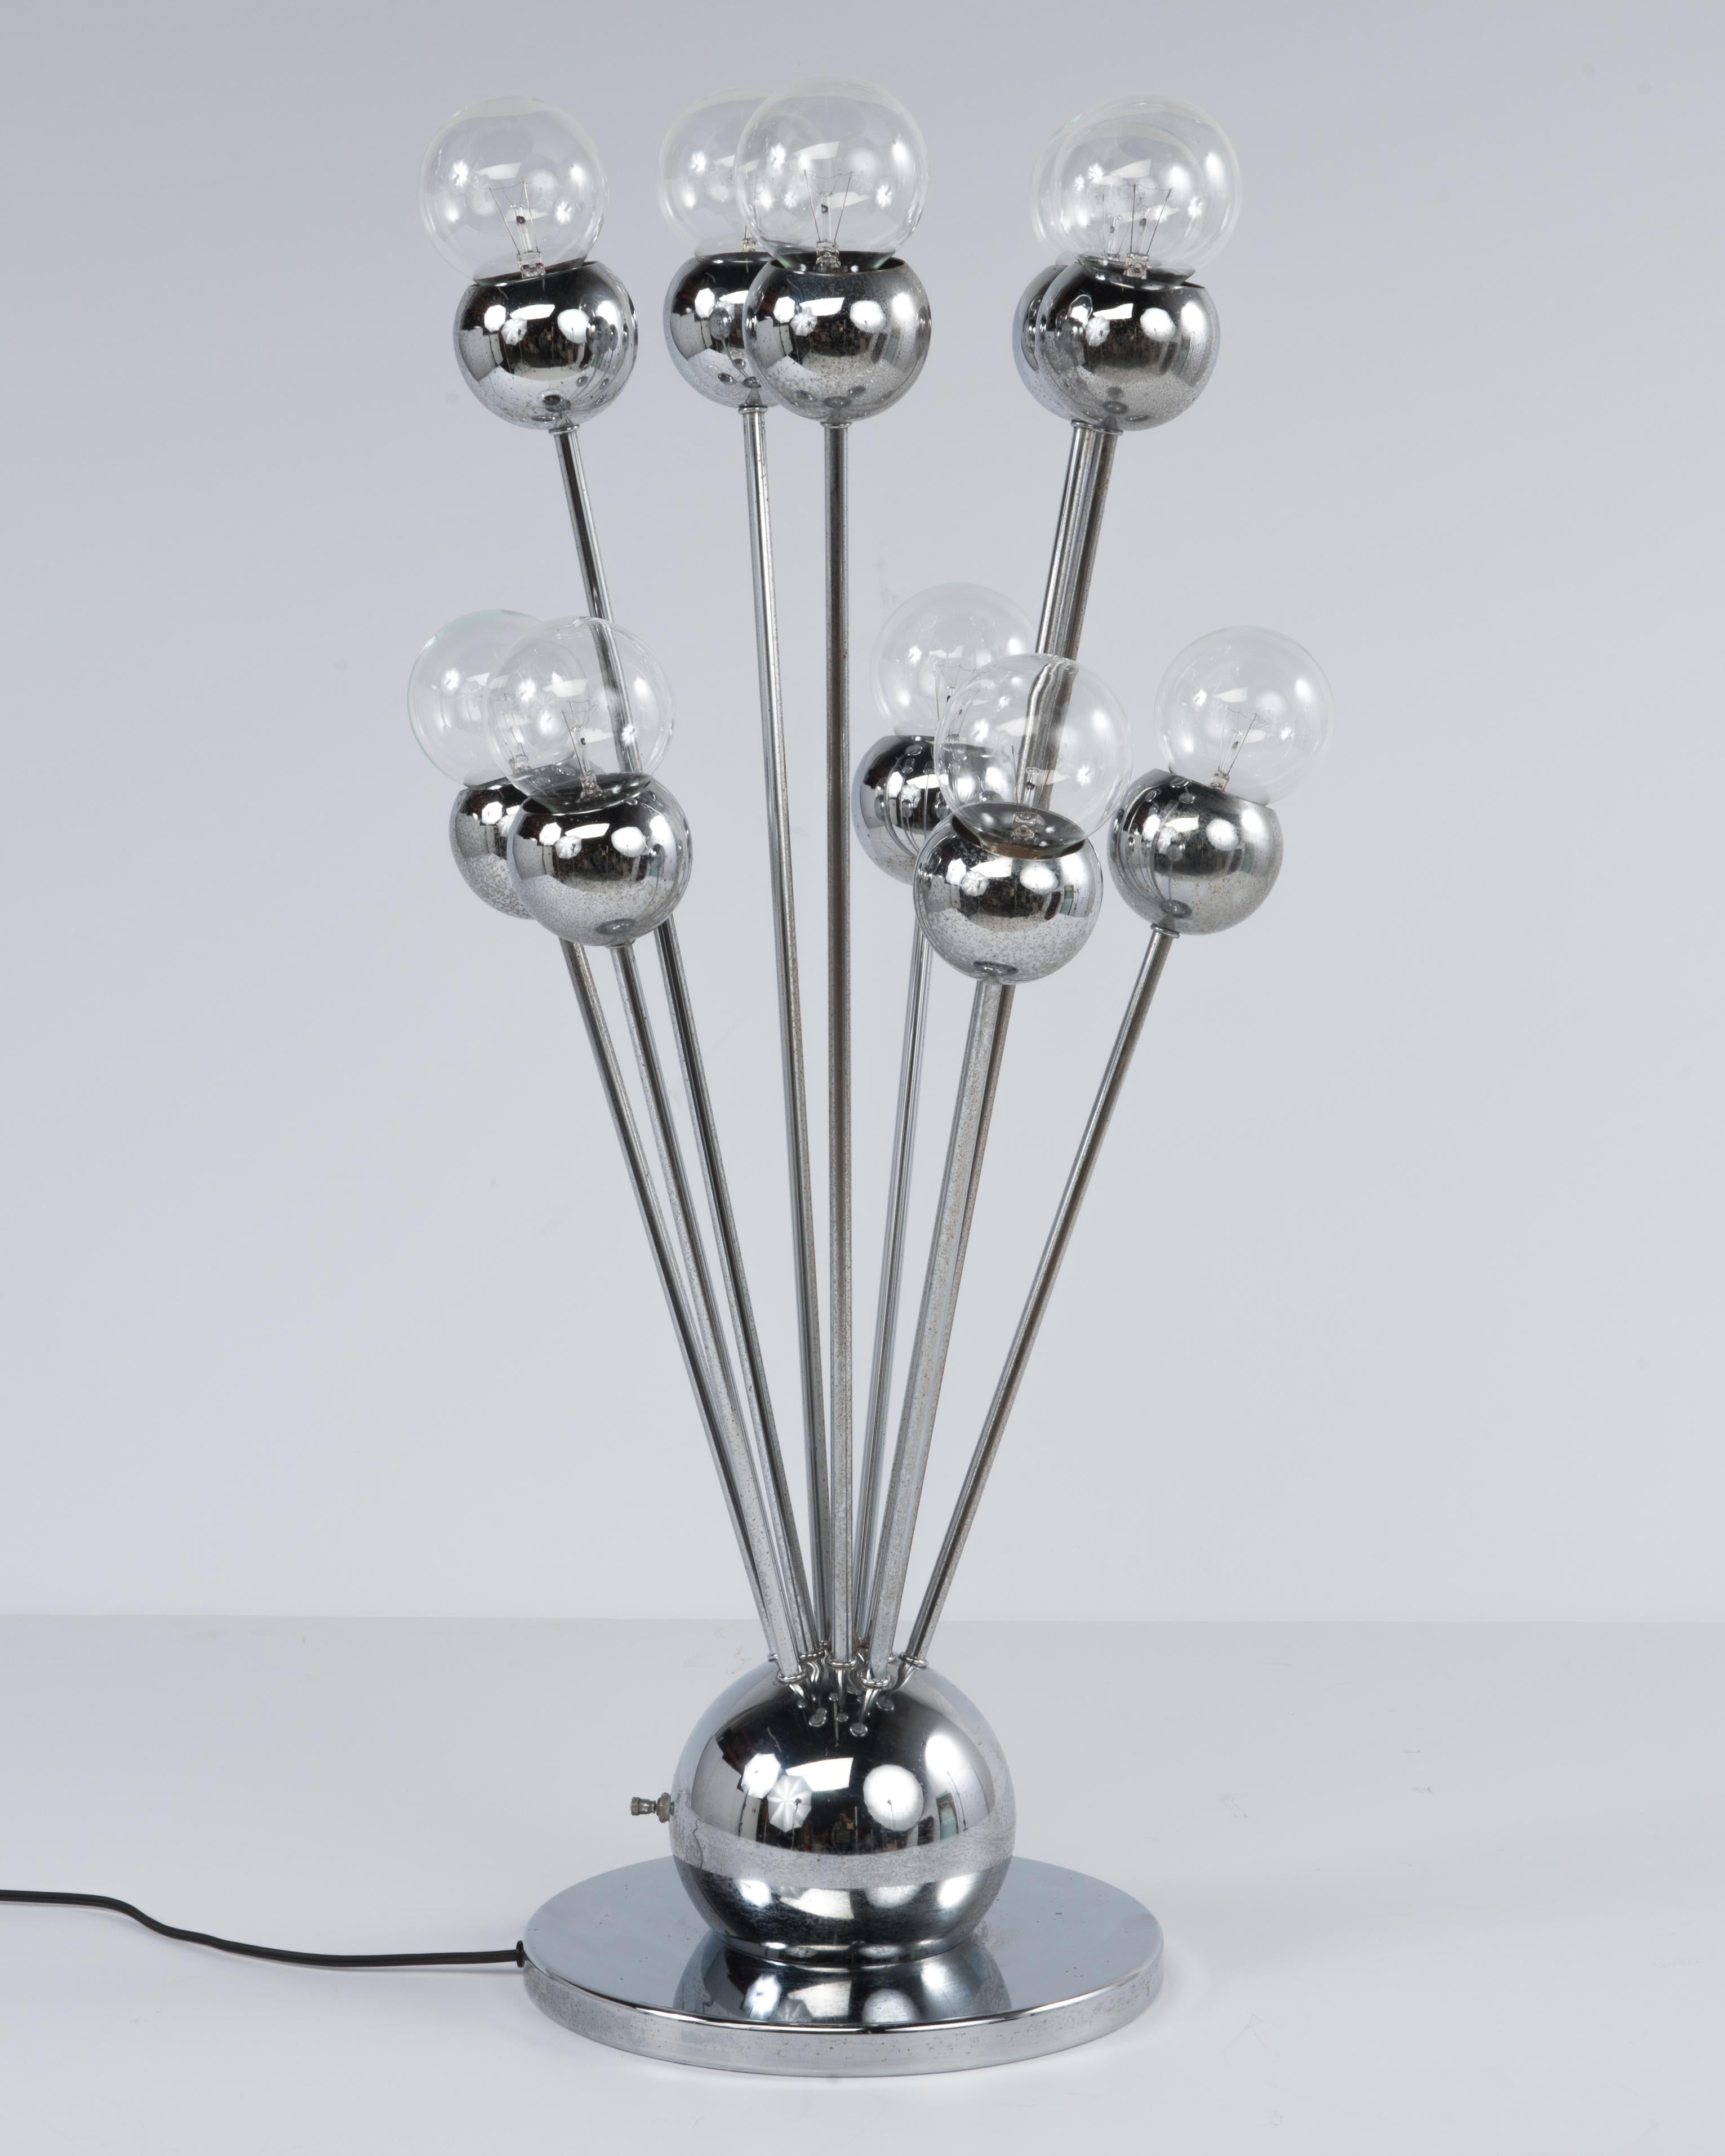 Mid-20th Century Torino Italy Lamp Chrome Eyeball Table Lamp Sputnik Midcentury Space Age